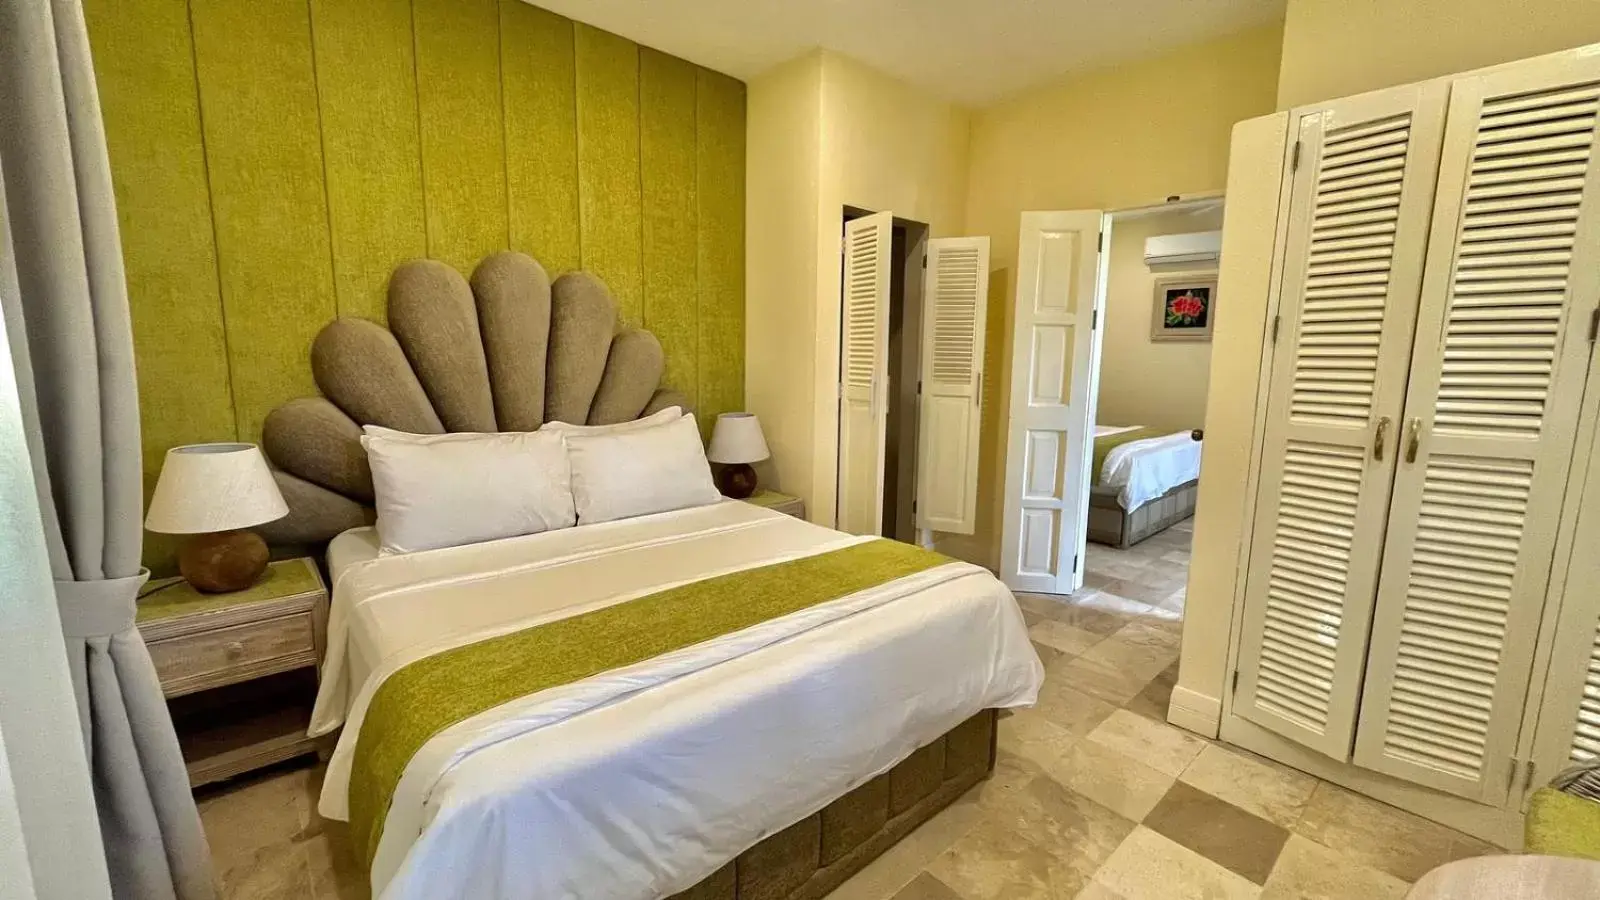 Bed in Coco Grove Beach Resort, Siquijor Island